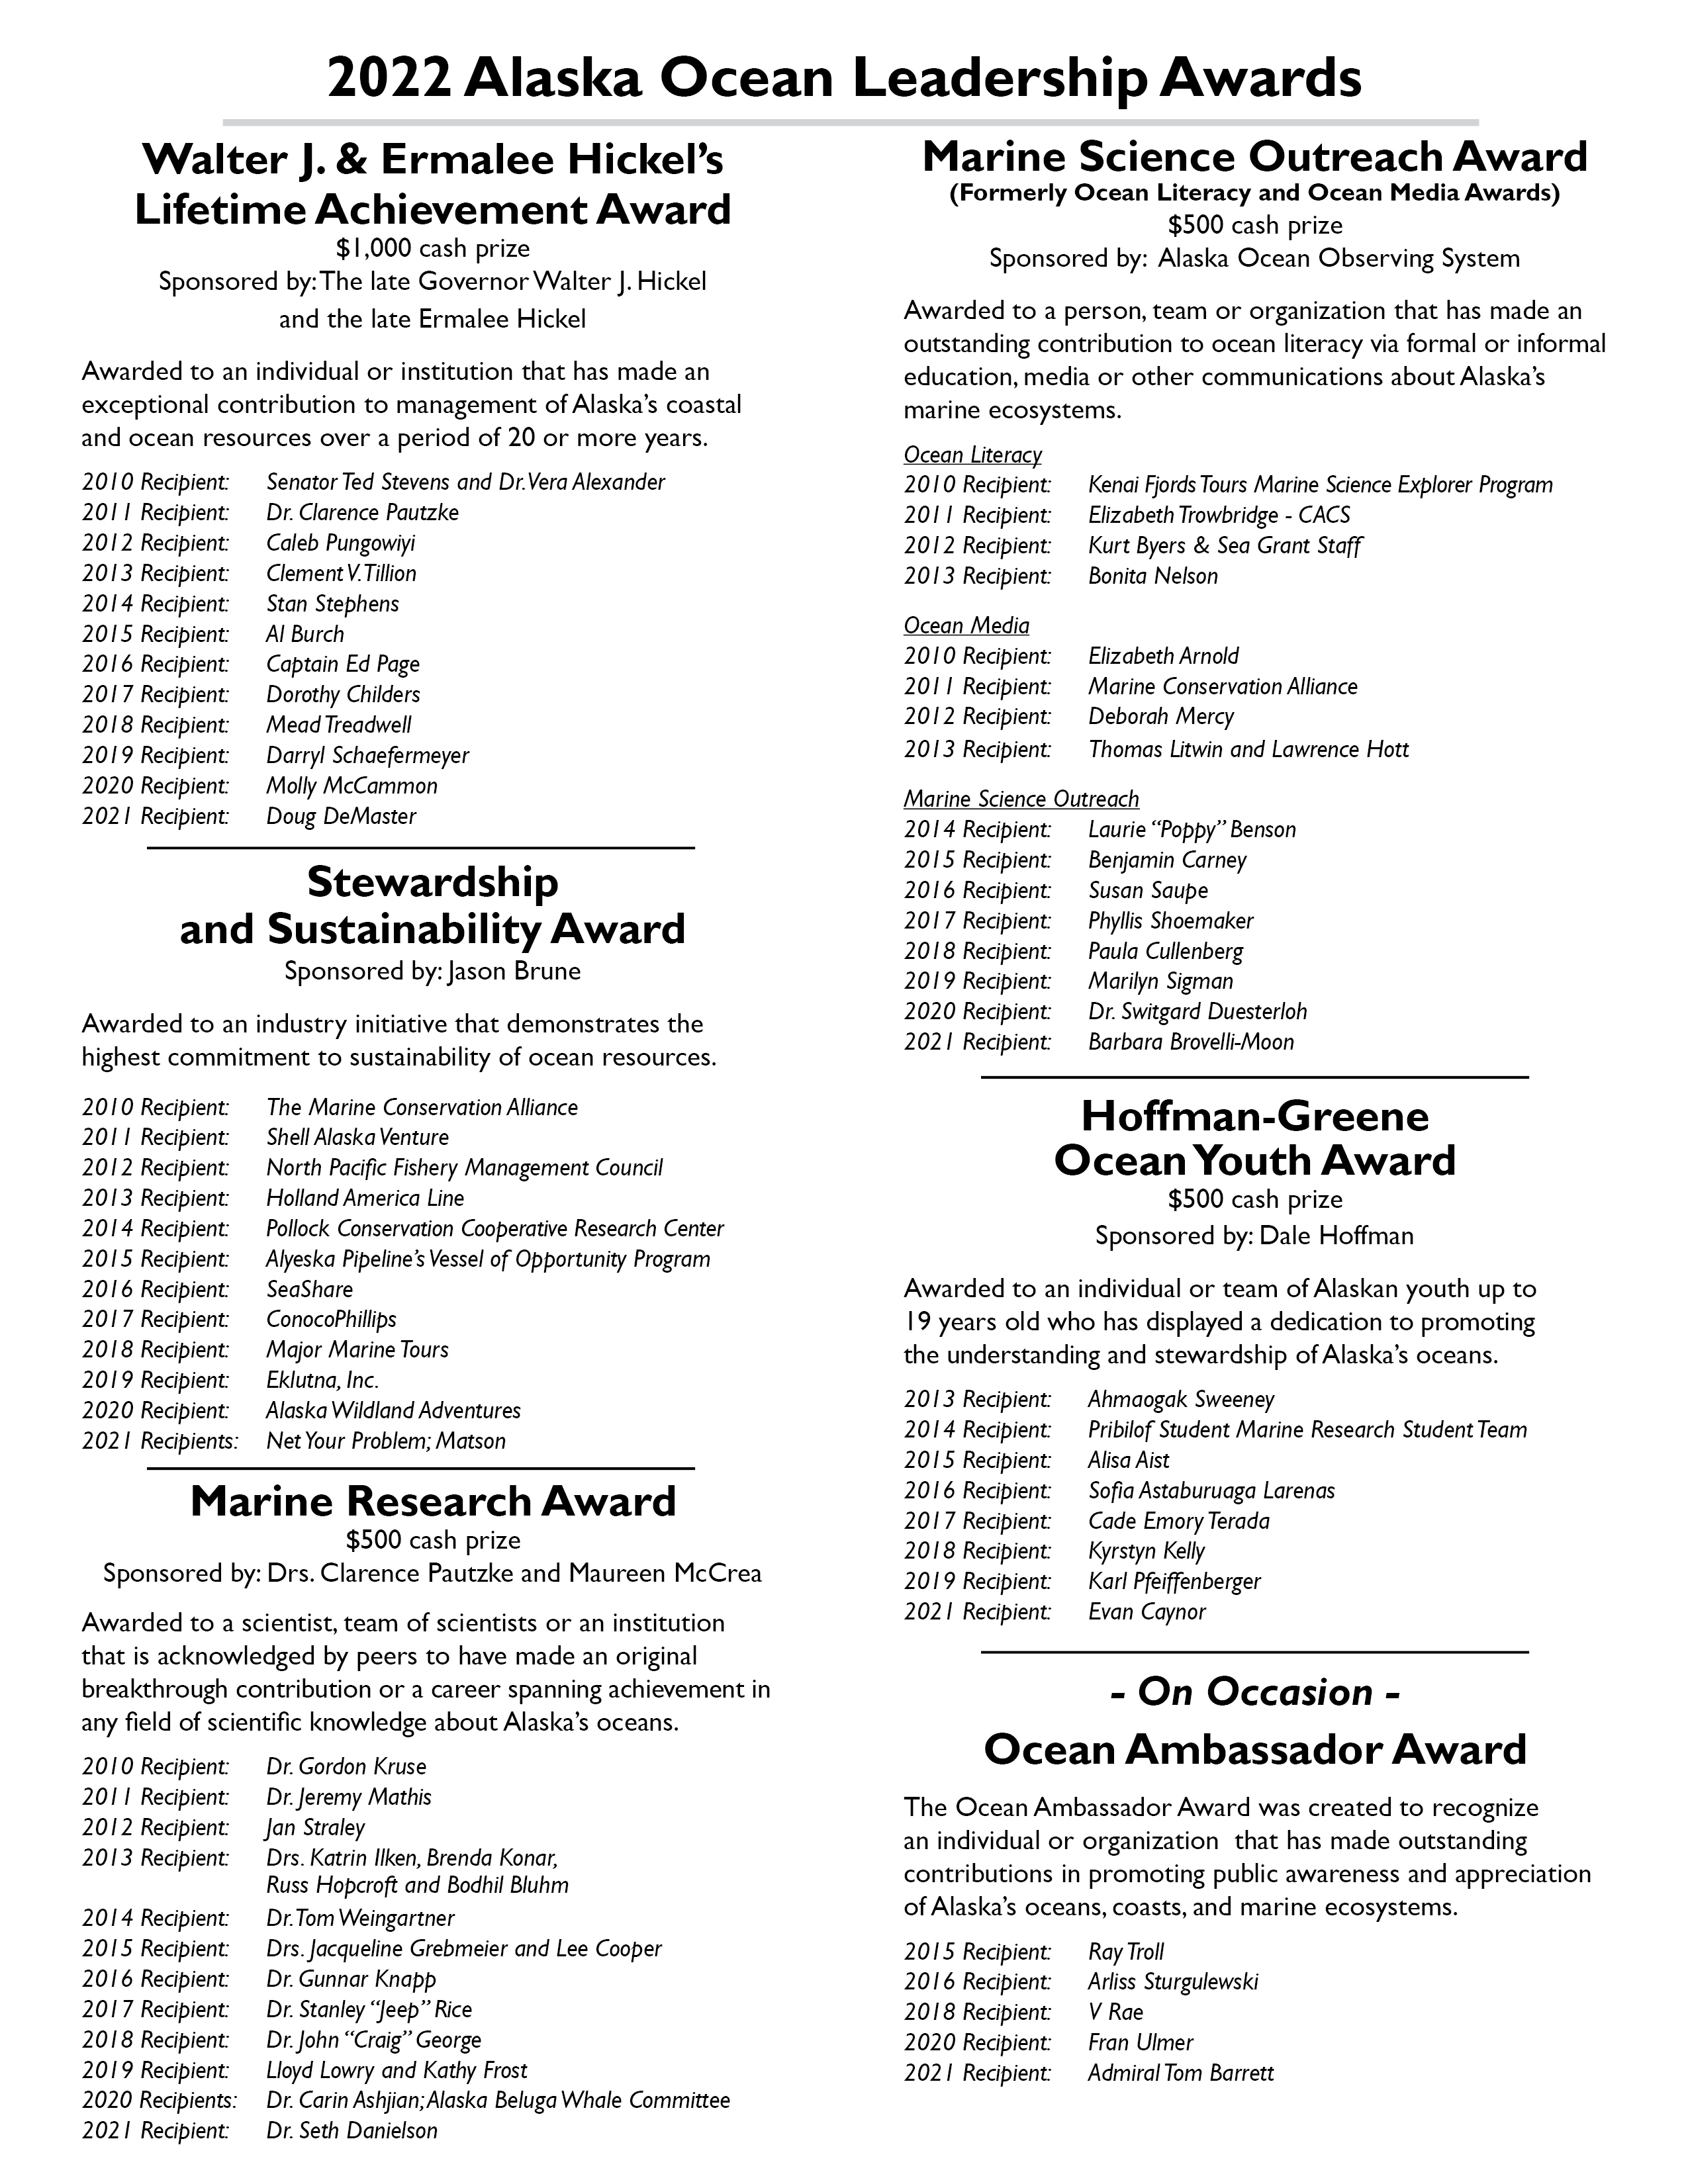 Past Award Winners & Descriptions